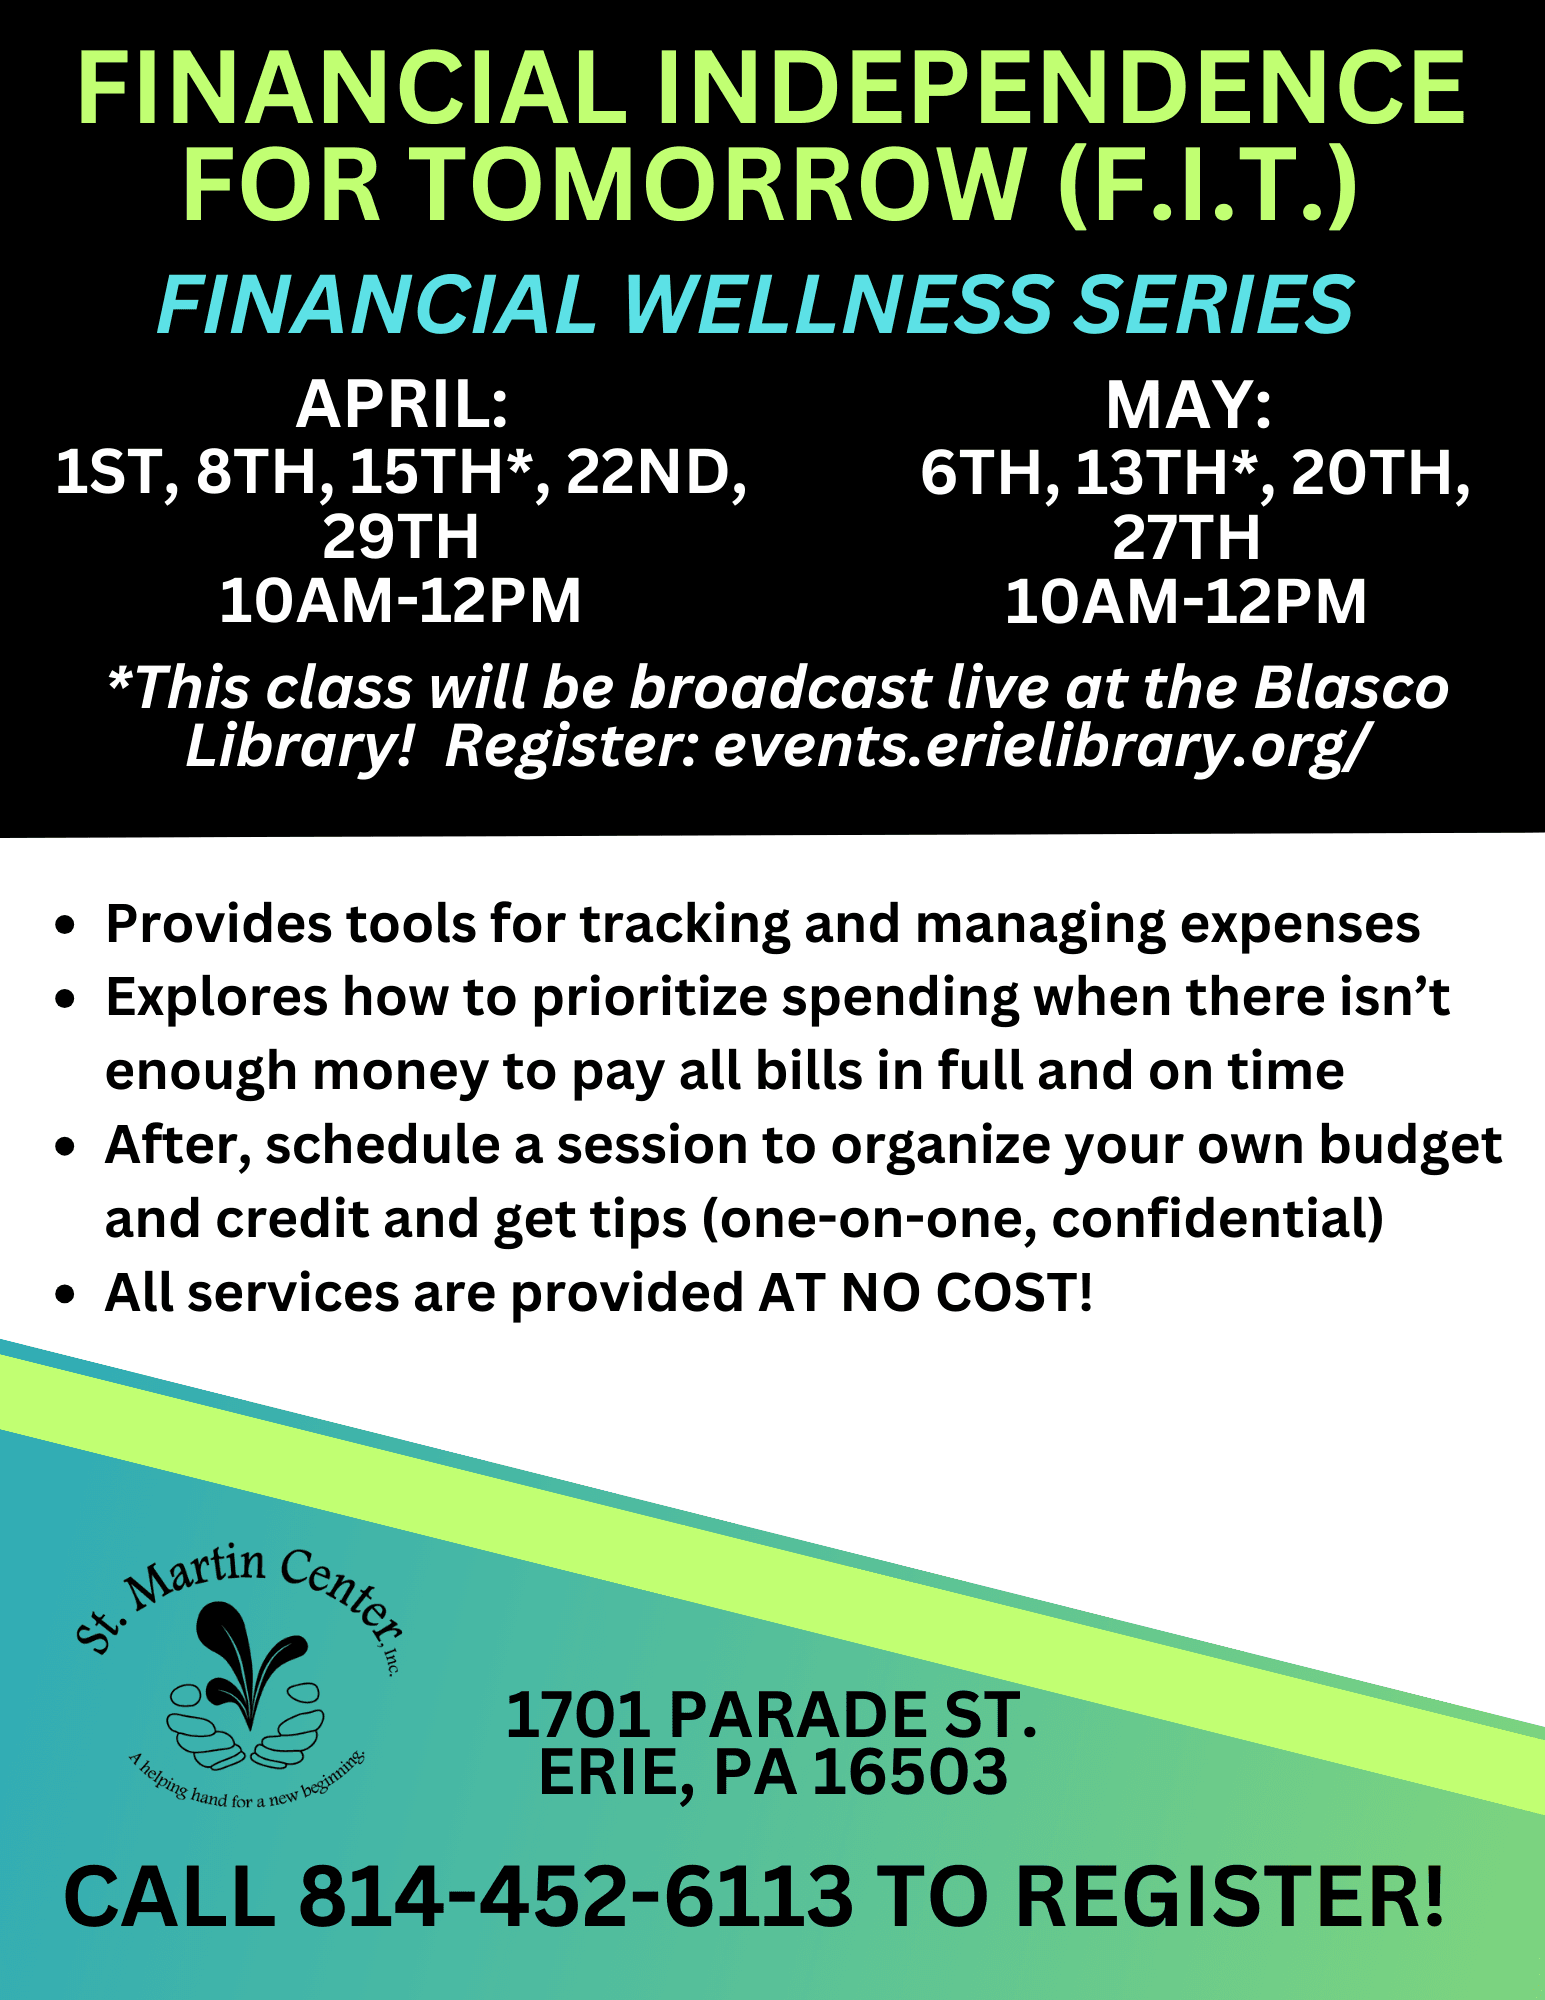 Financial Wellness Series - Apr/May Dates